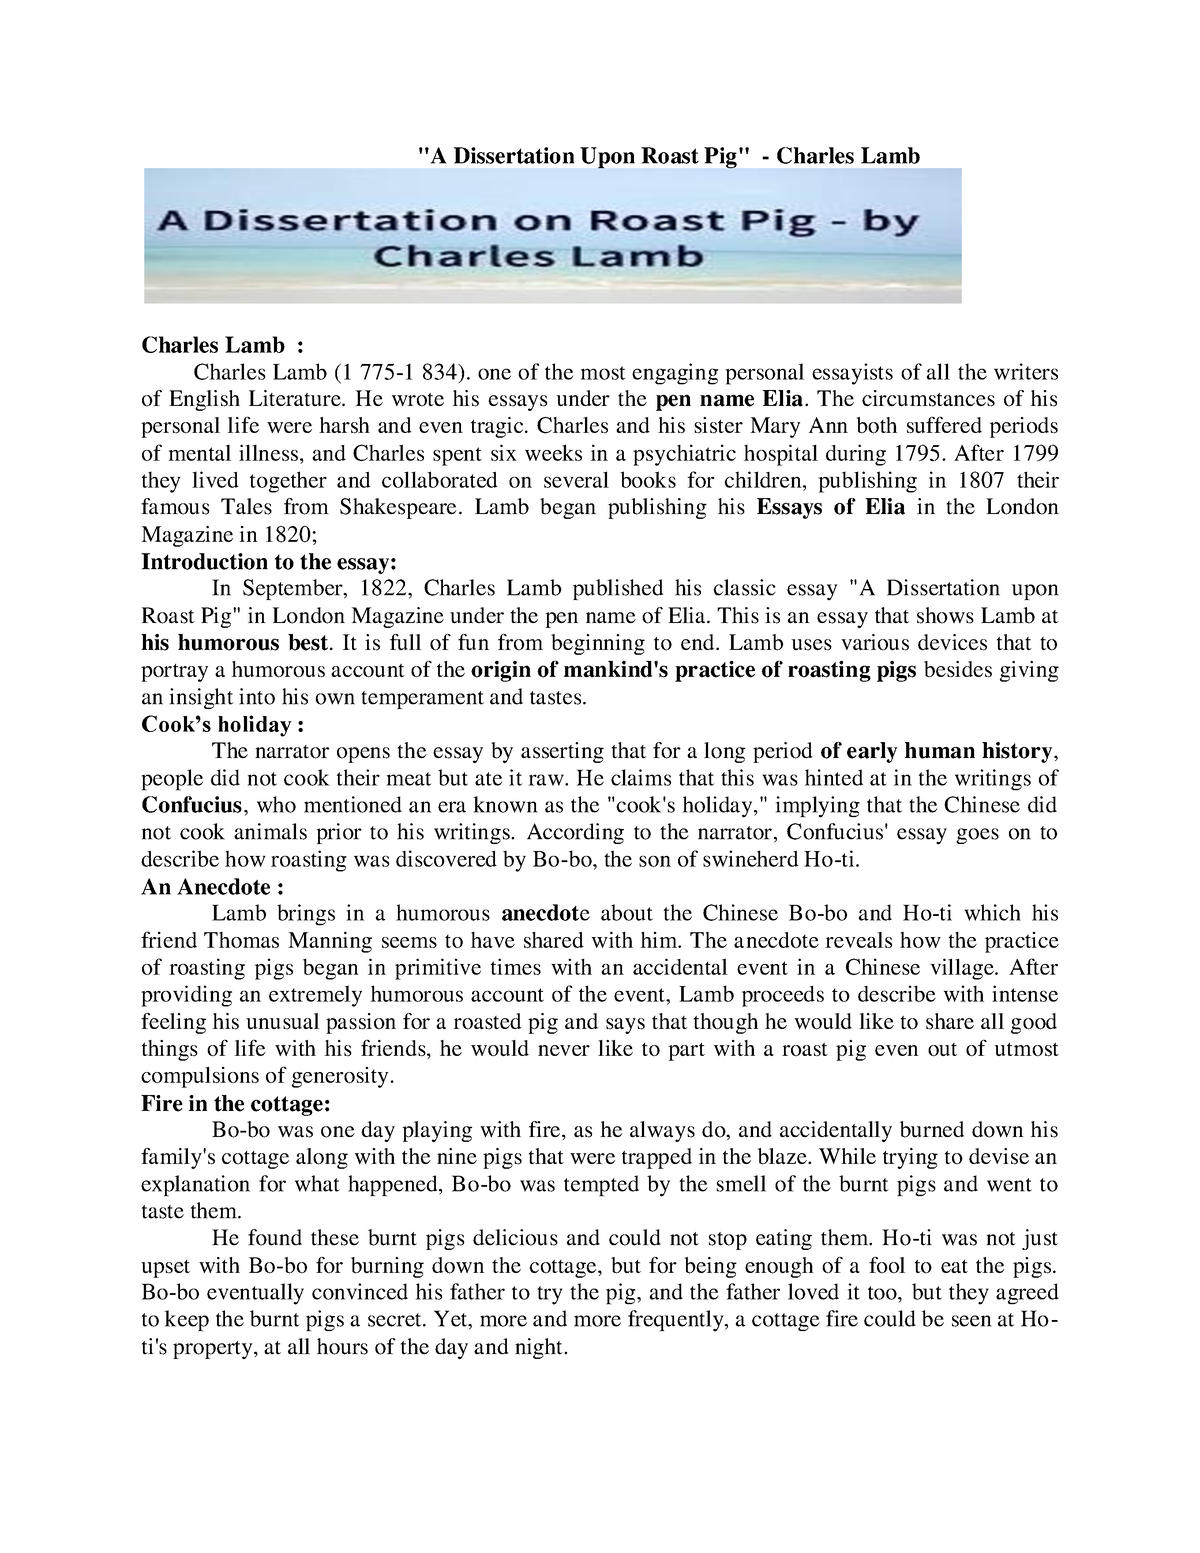 a dissertation upon roast pig summary in tamil